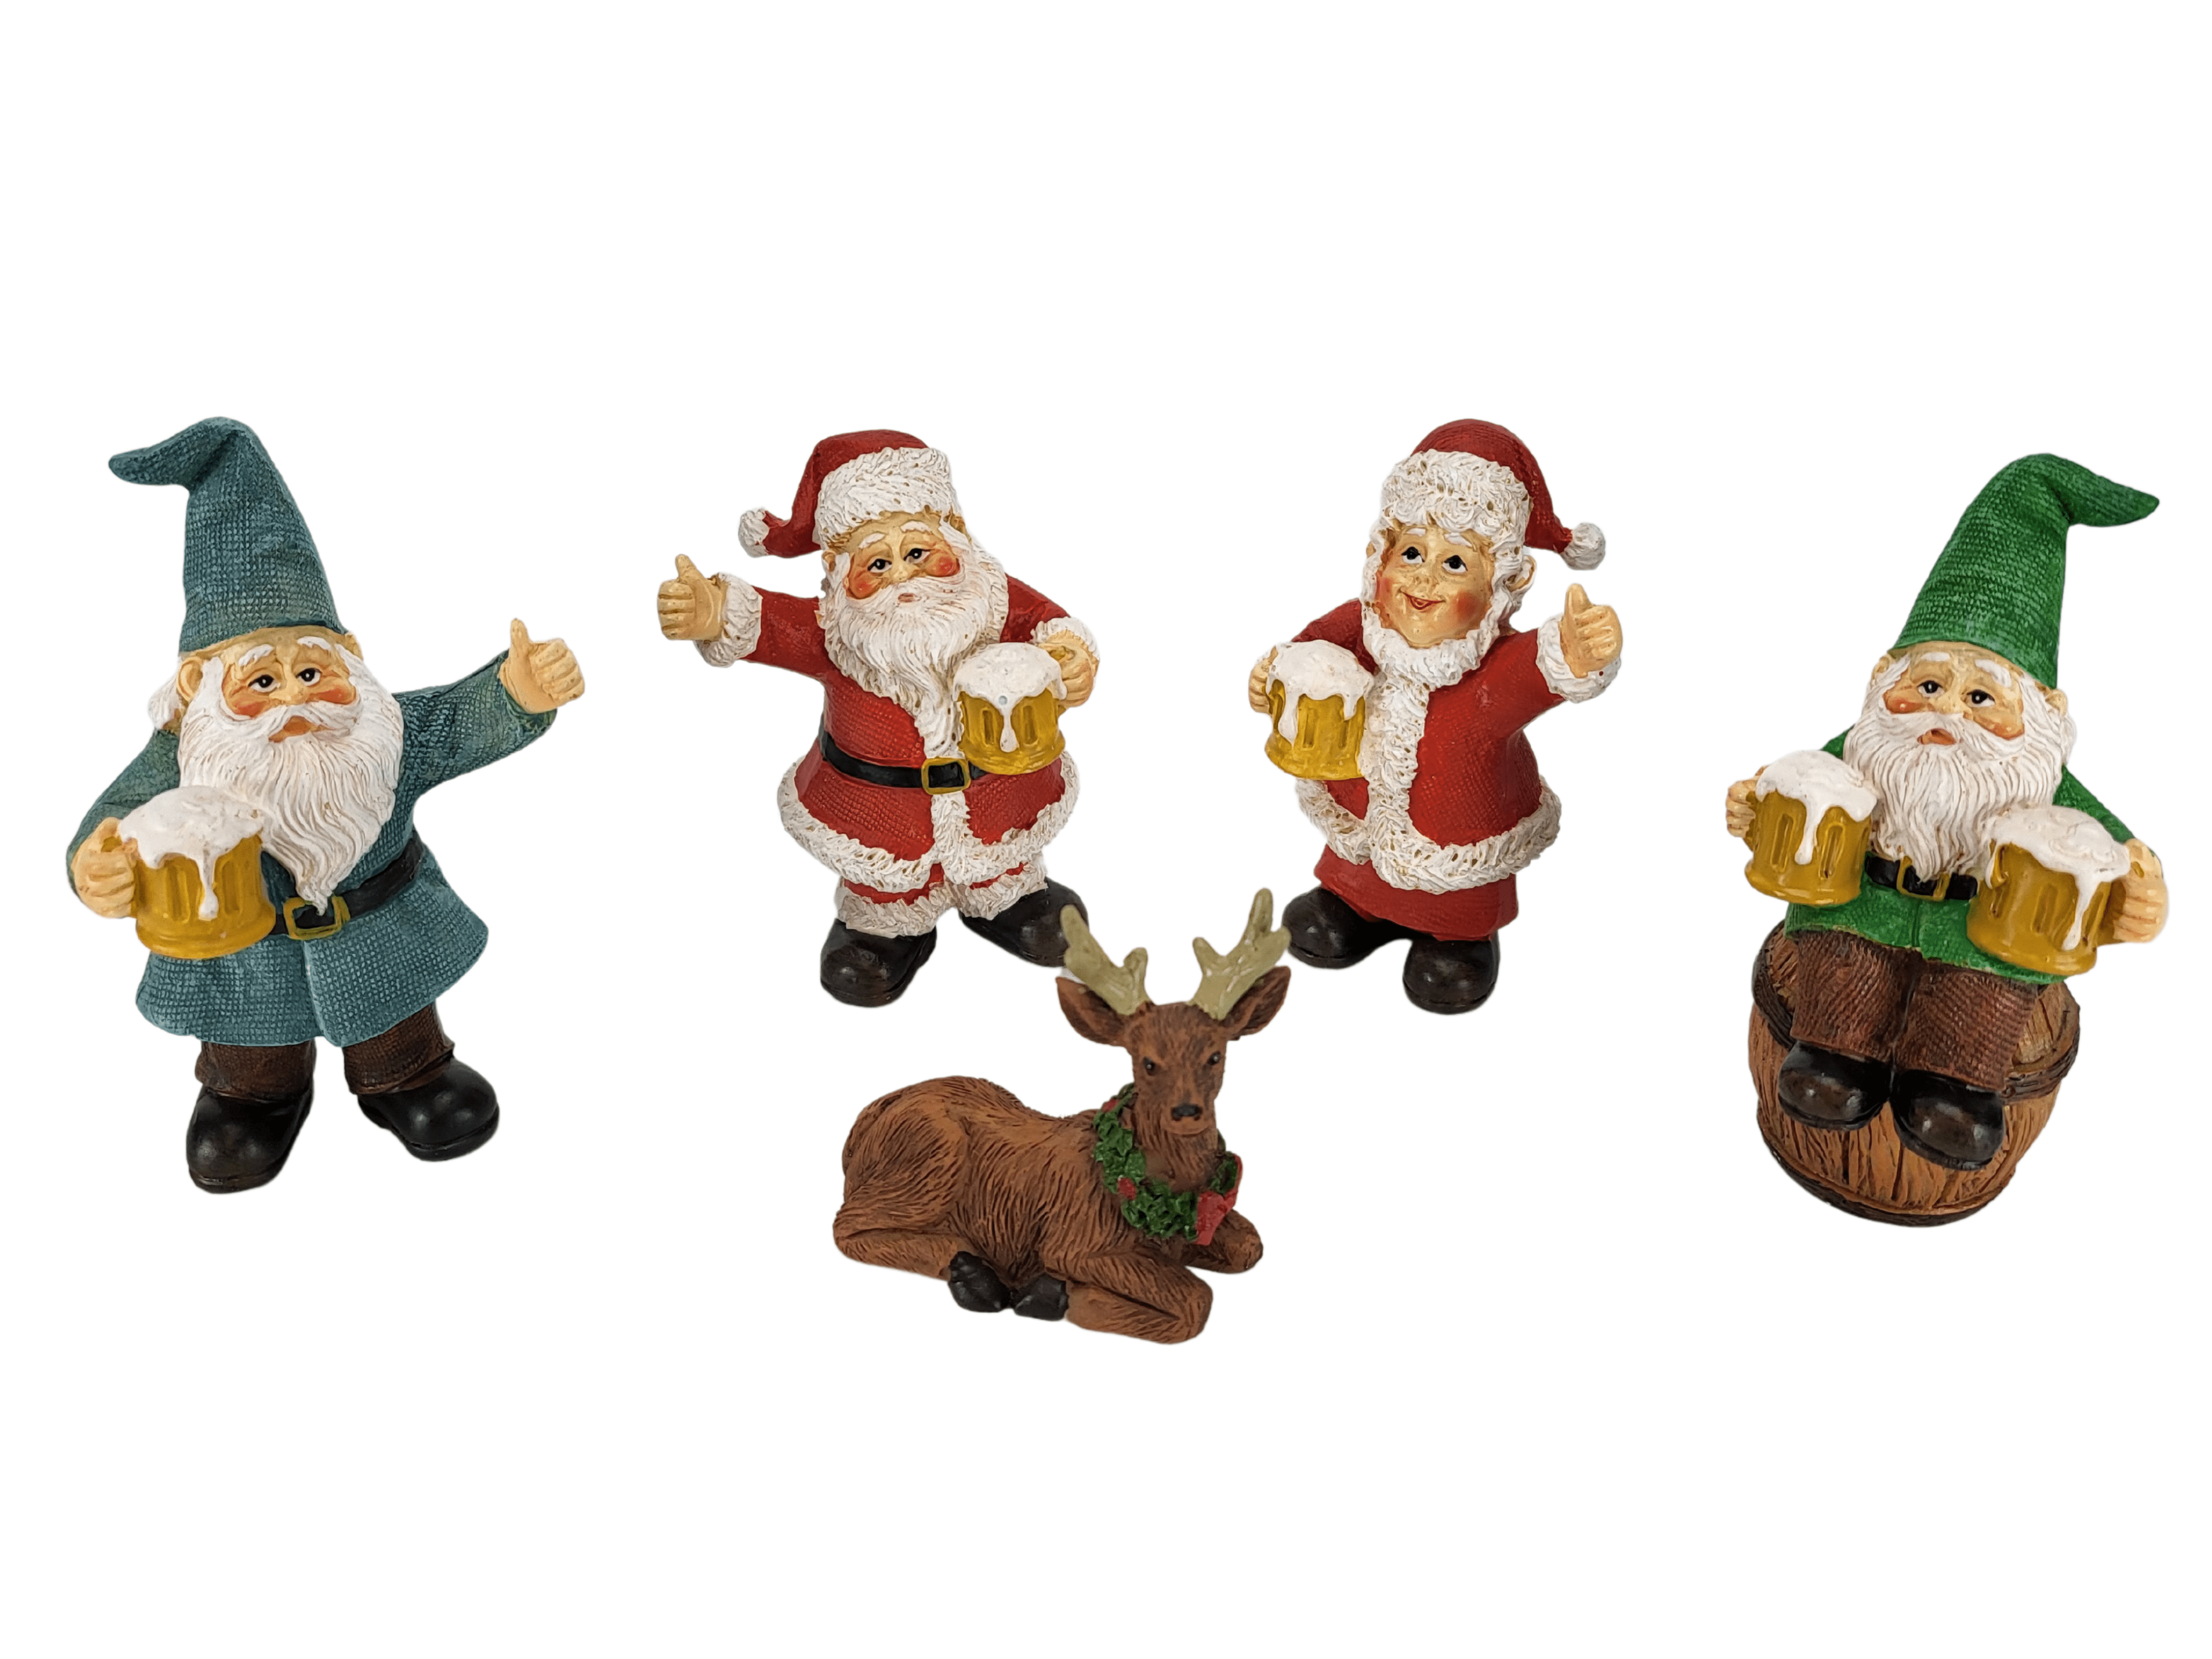 Miniature Gnomes Figurines 5-Piece Set HAPPY GNOMES Beer Drinking Buddies! 